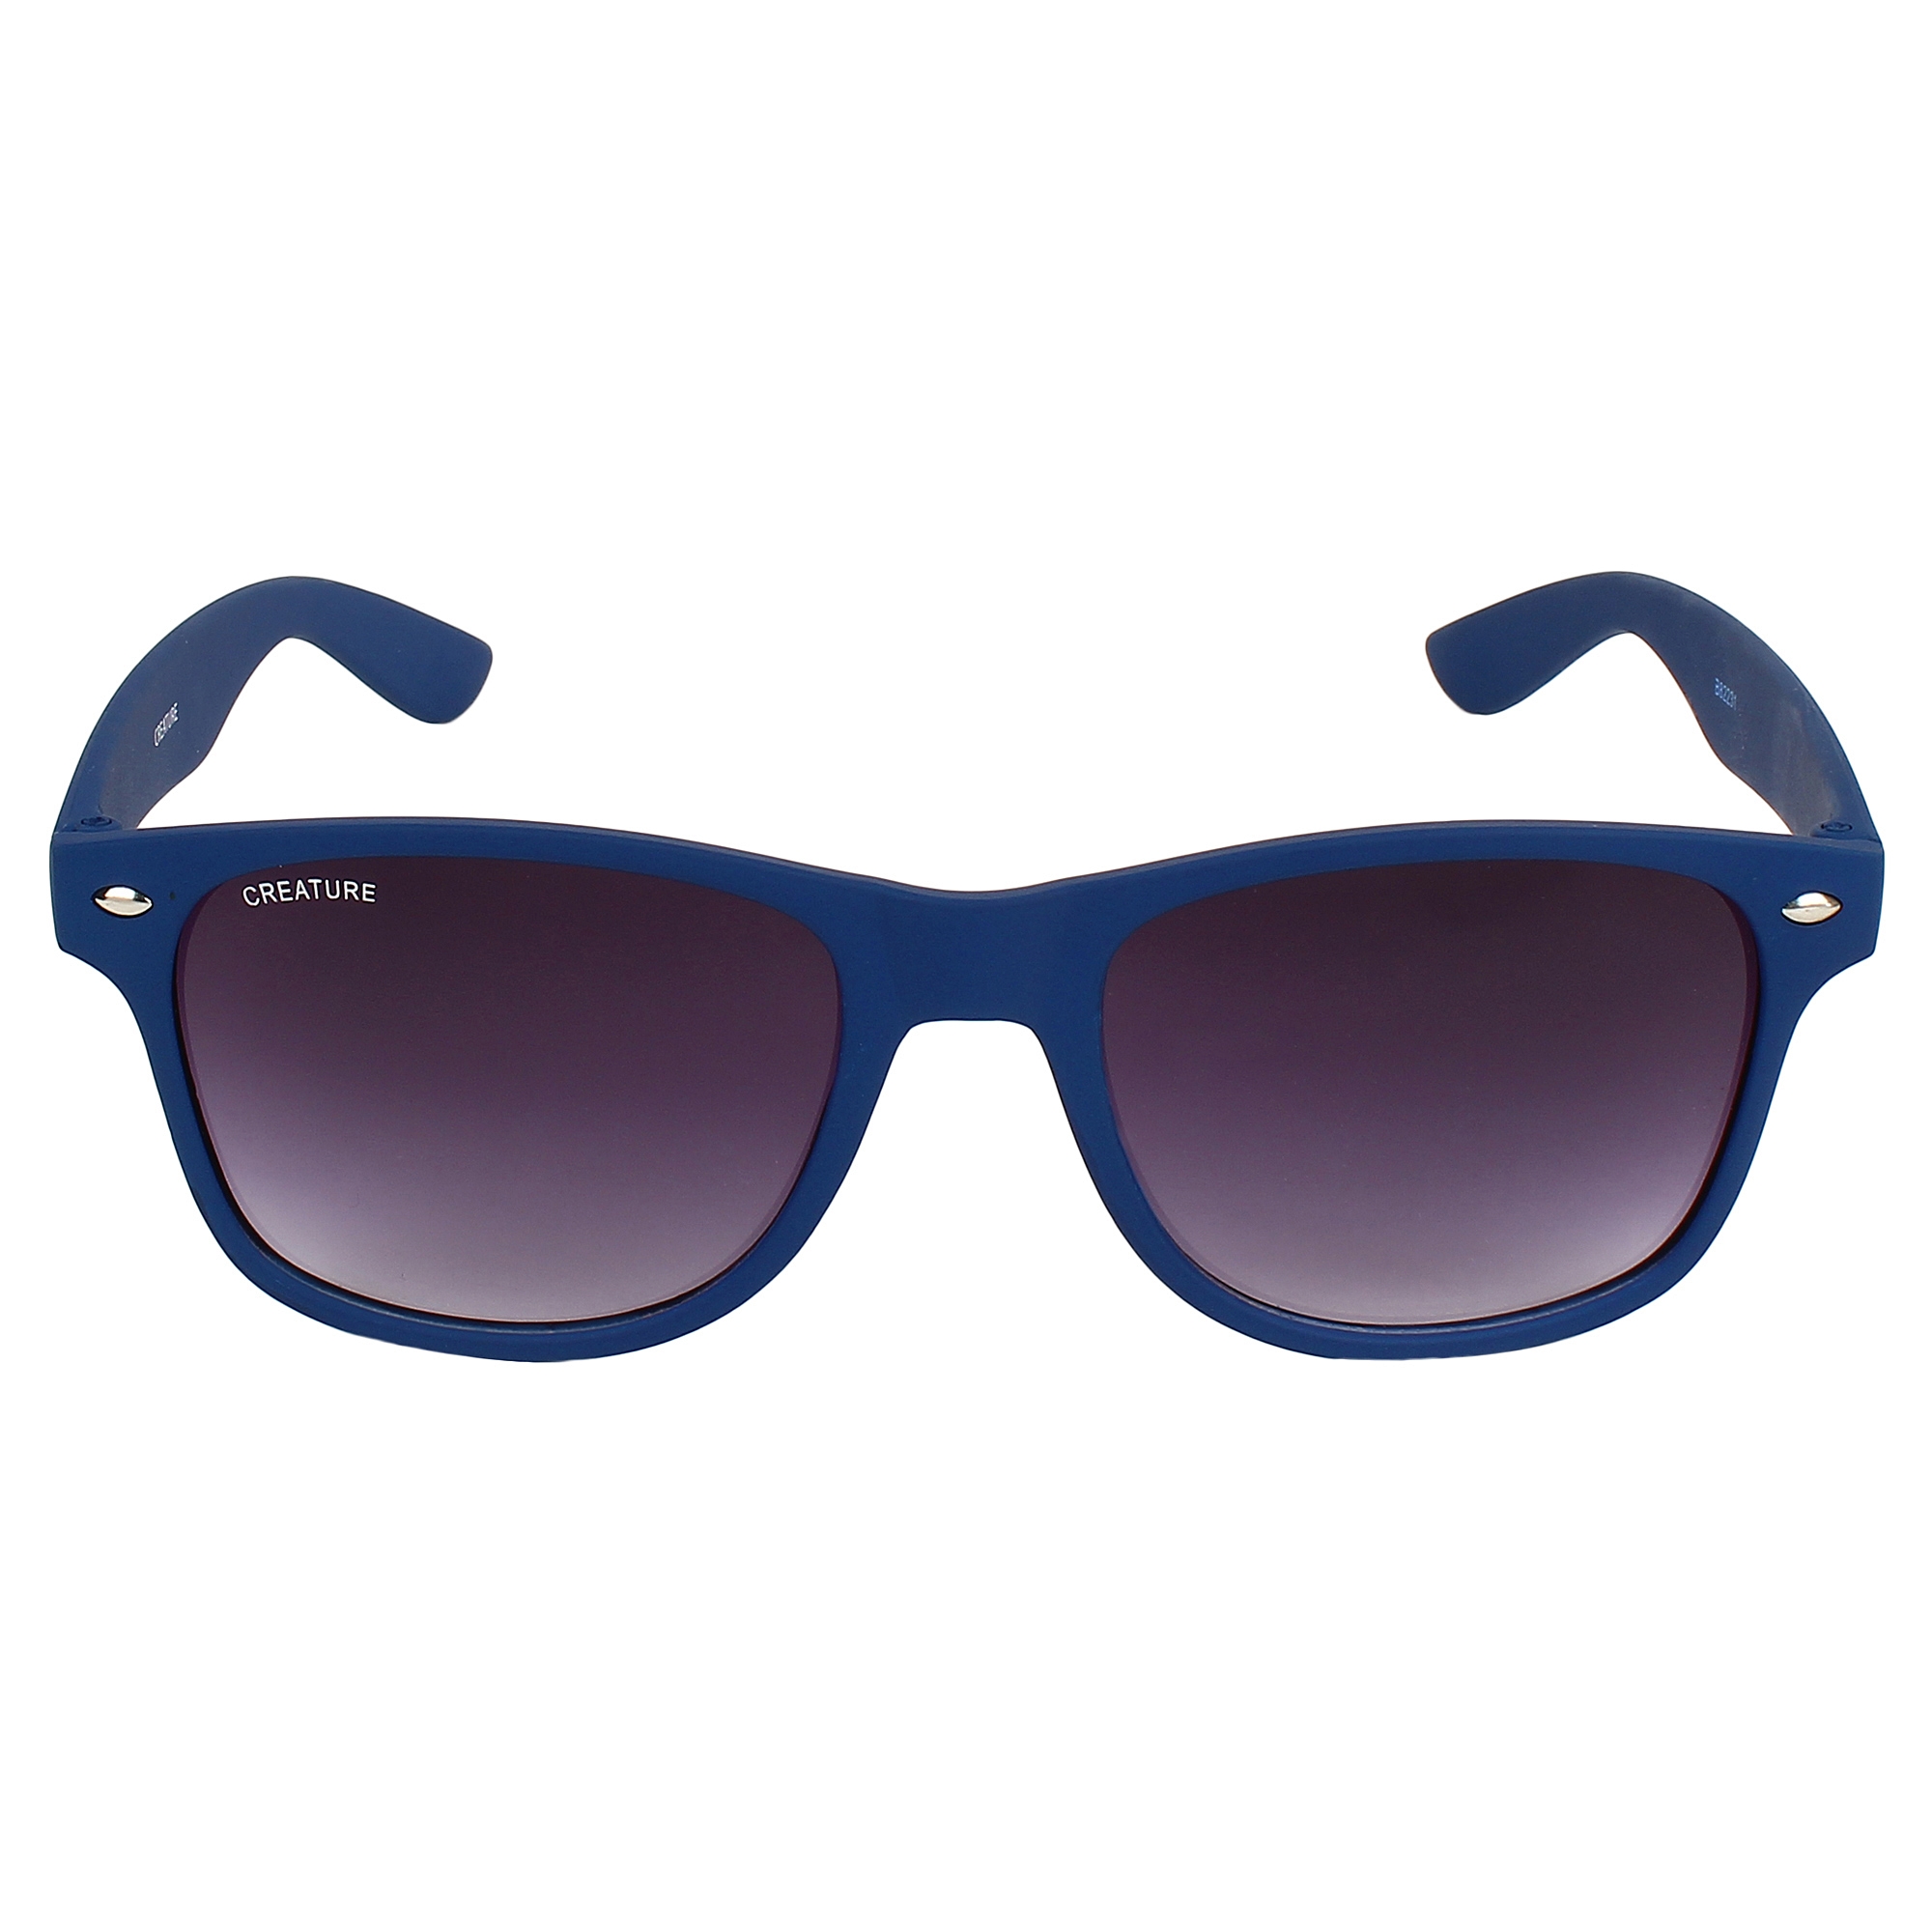 CREATURE | CREATURE Blue Matte Finish UV Protected Unisex Sunglasses (Lens-Purple|Frame-Blue)